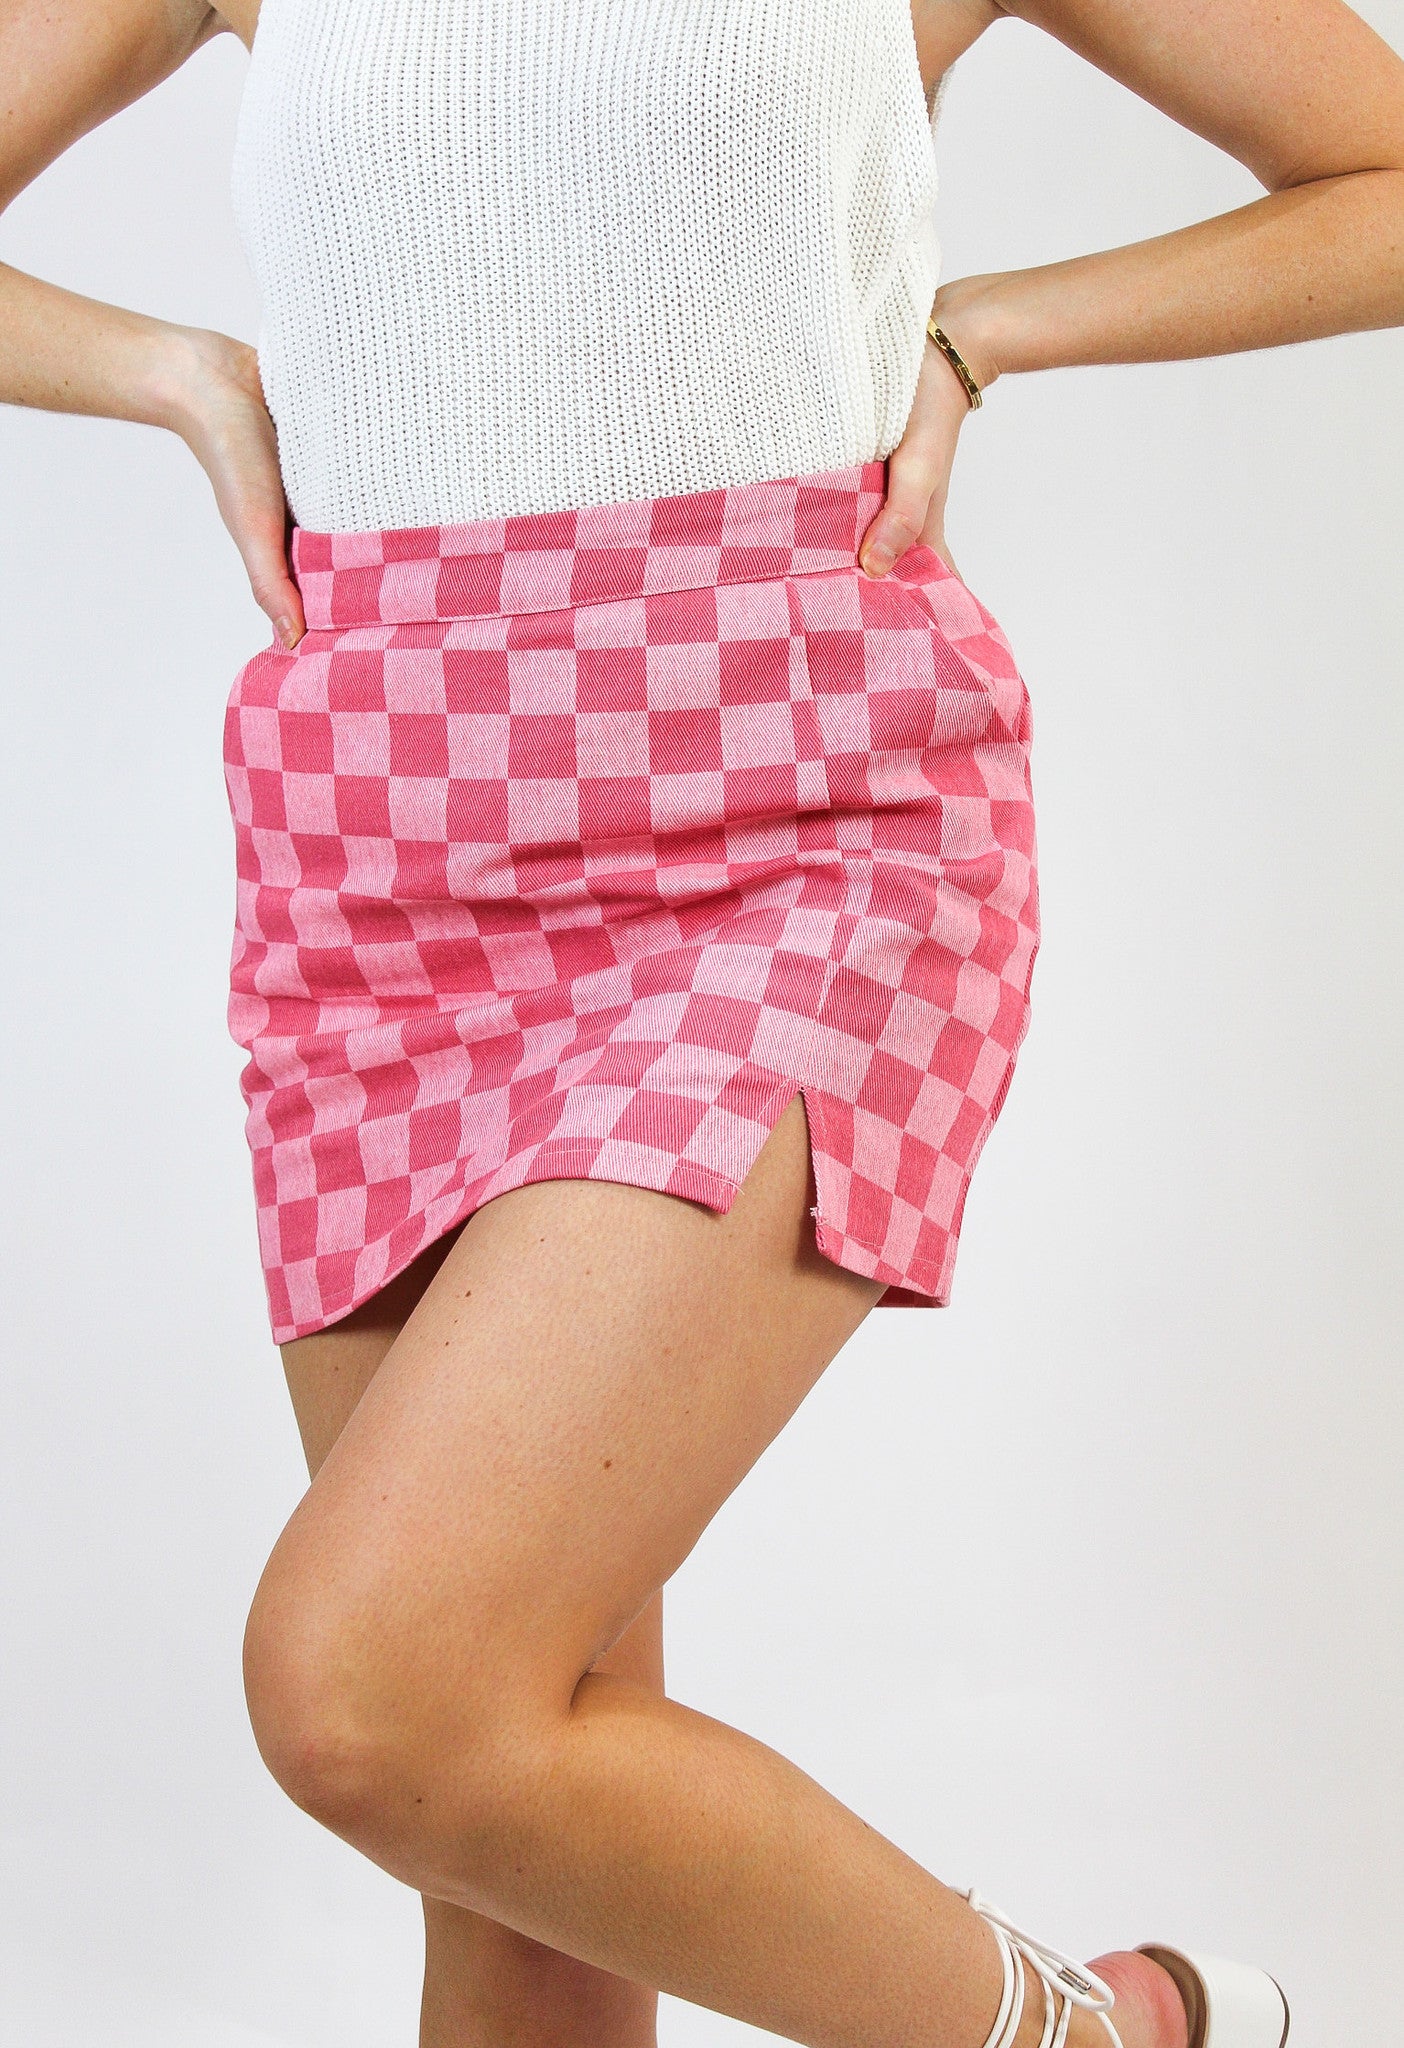 Playboy Checkered Skirt